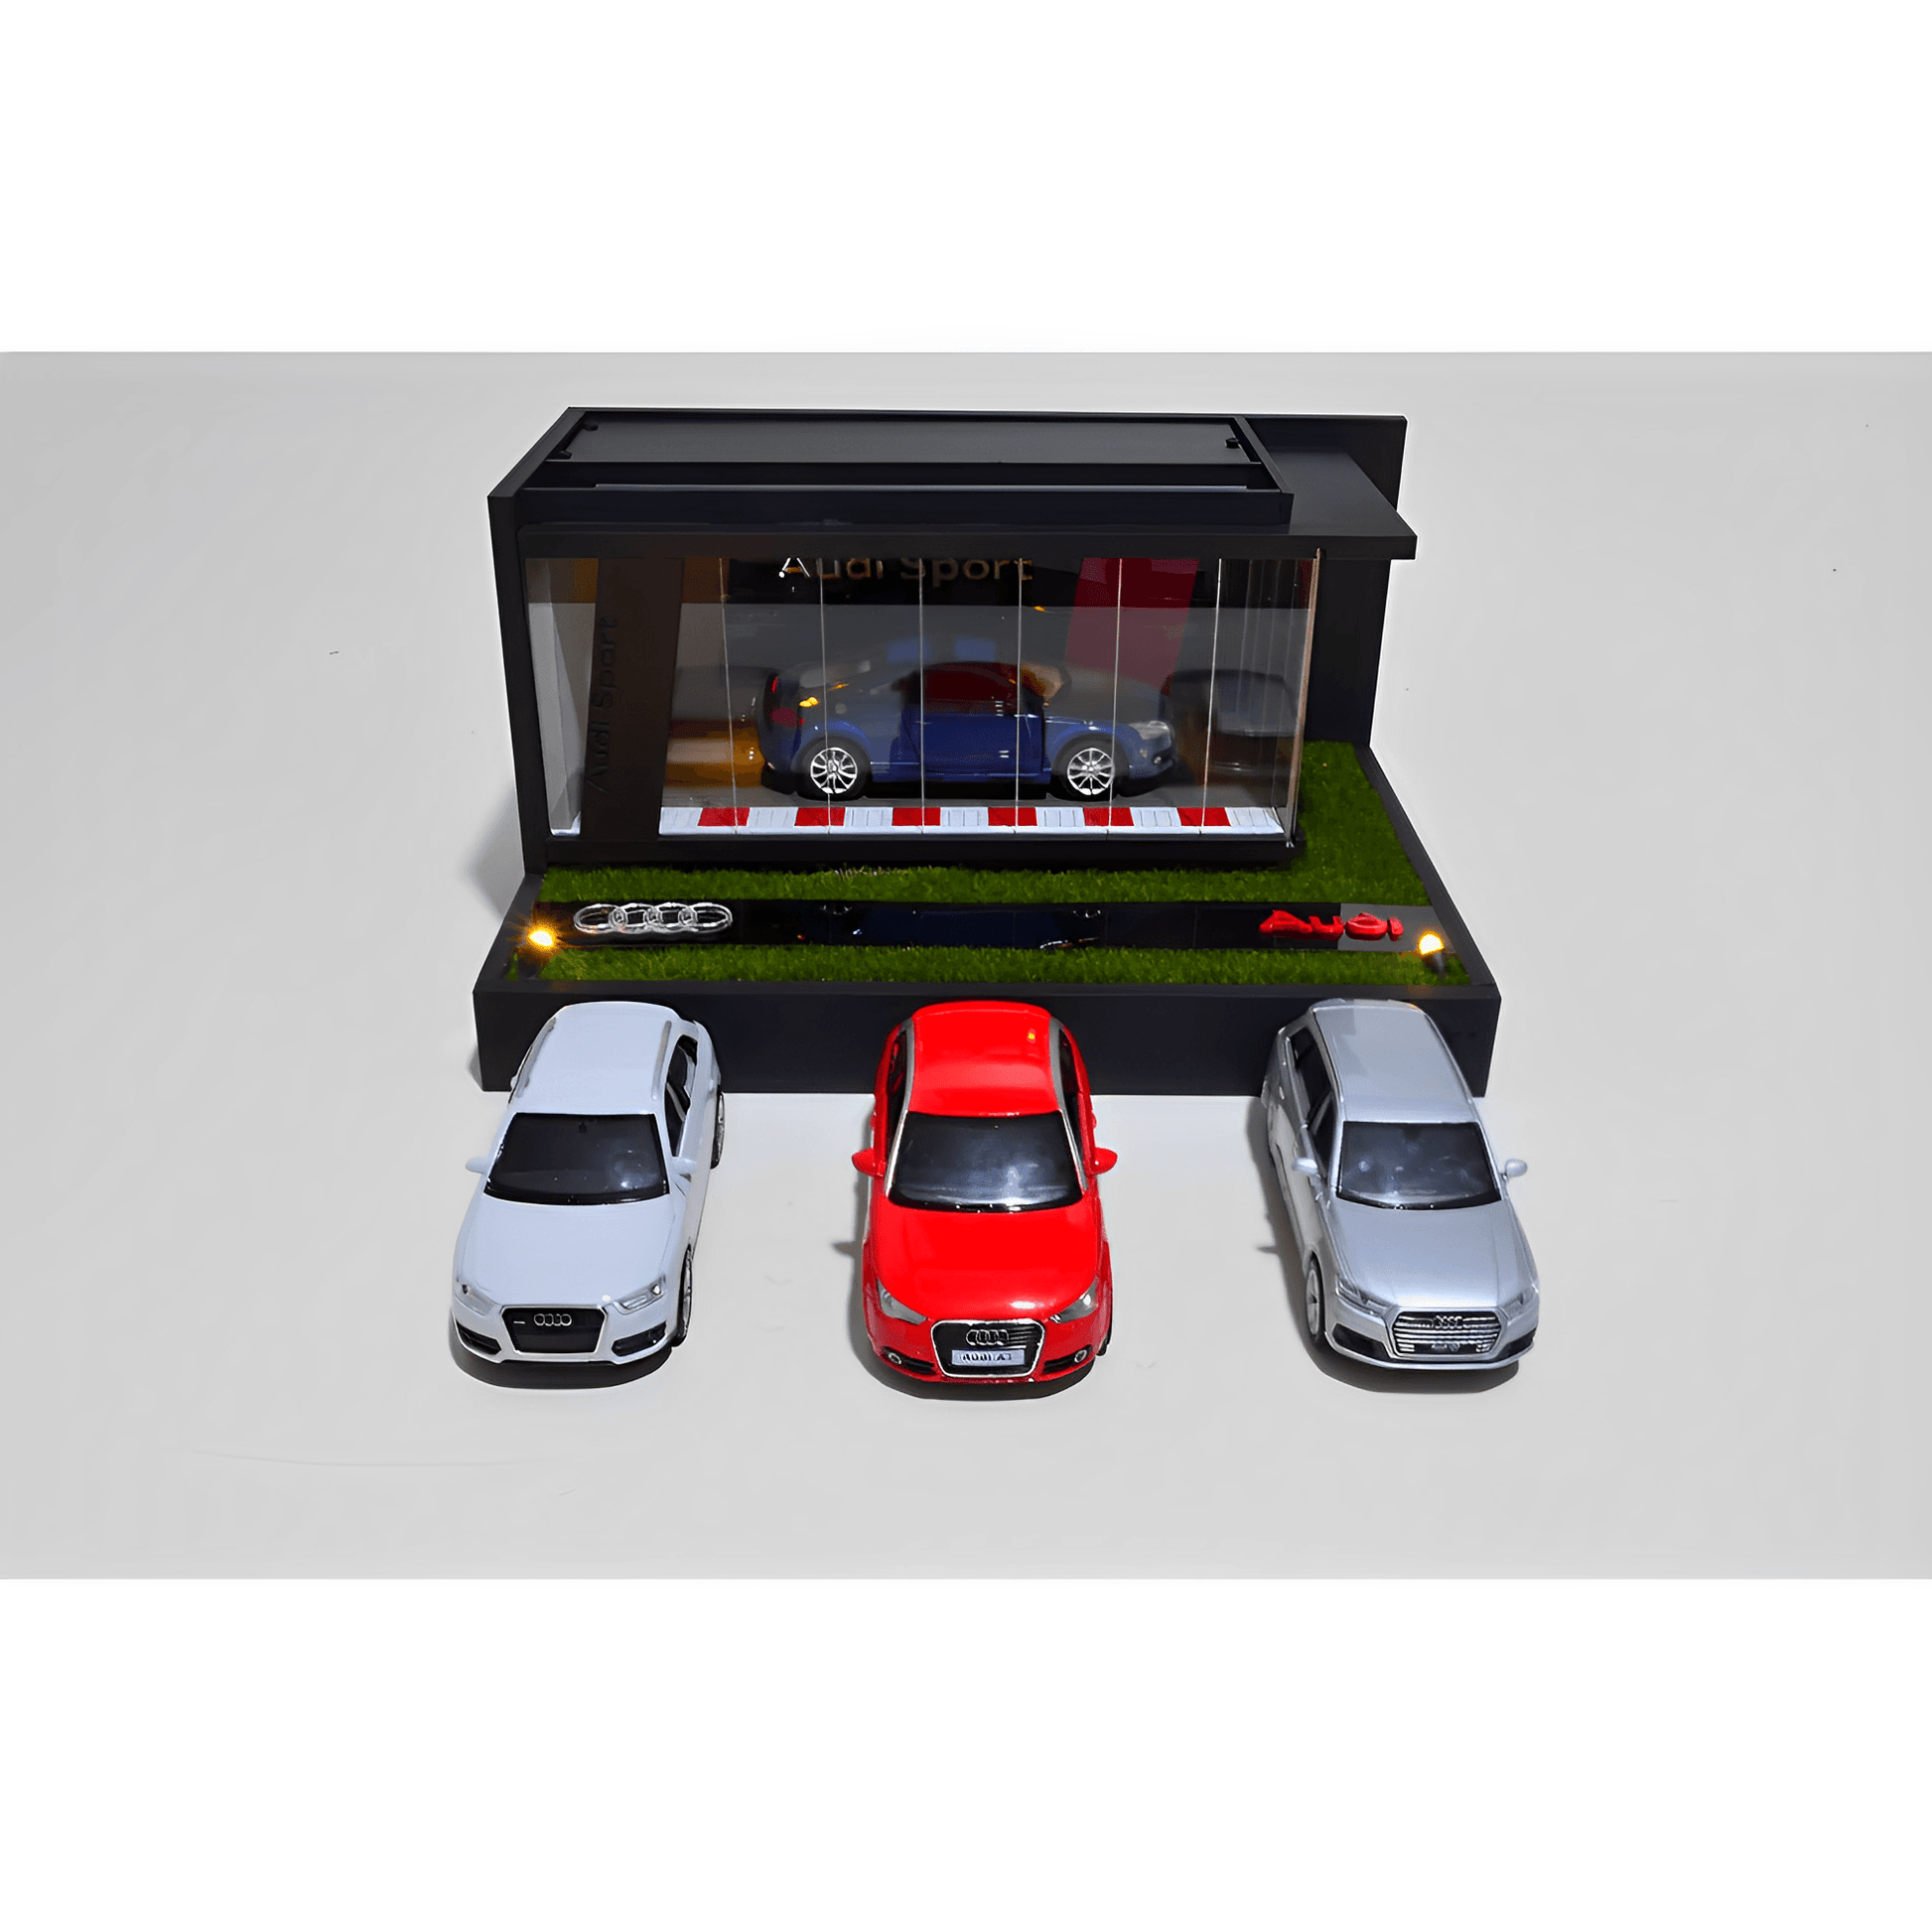 Audi Sport Dealership Exhibitor For Model Cars - Exclusive Item - Handmade - Brazilian Shop